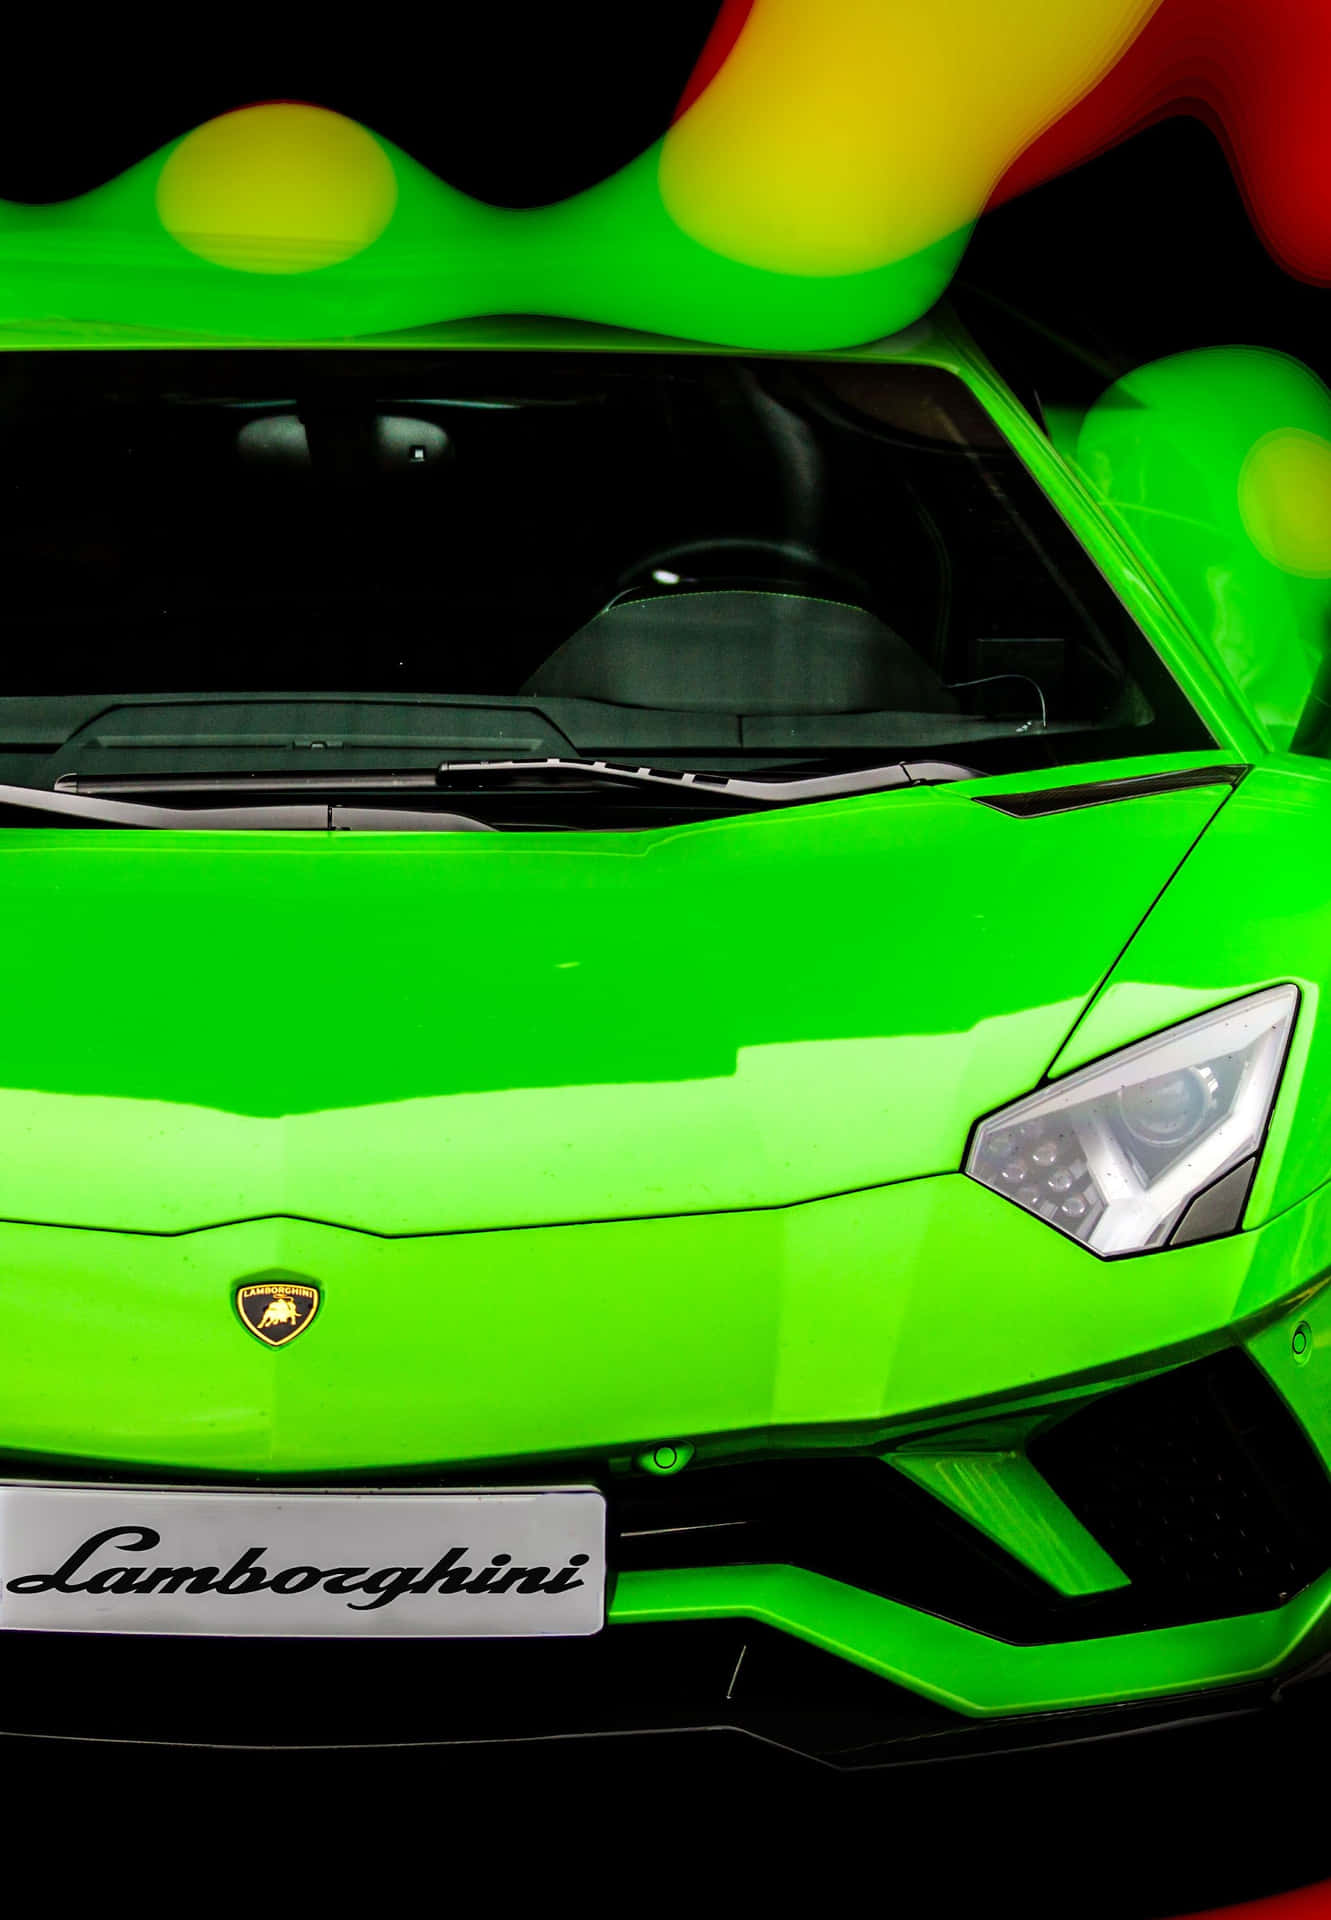 Experience an Adrenaline Rush in a Green Lamborghini Wallpaper